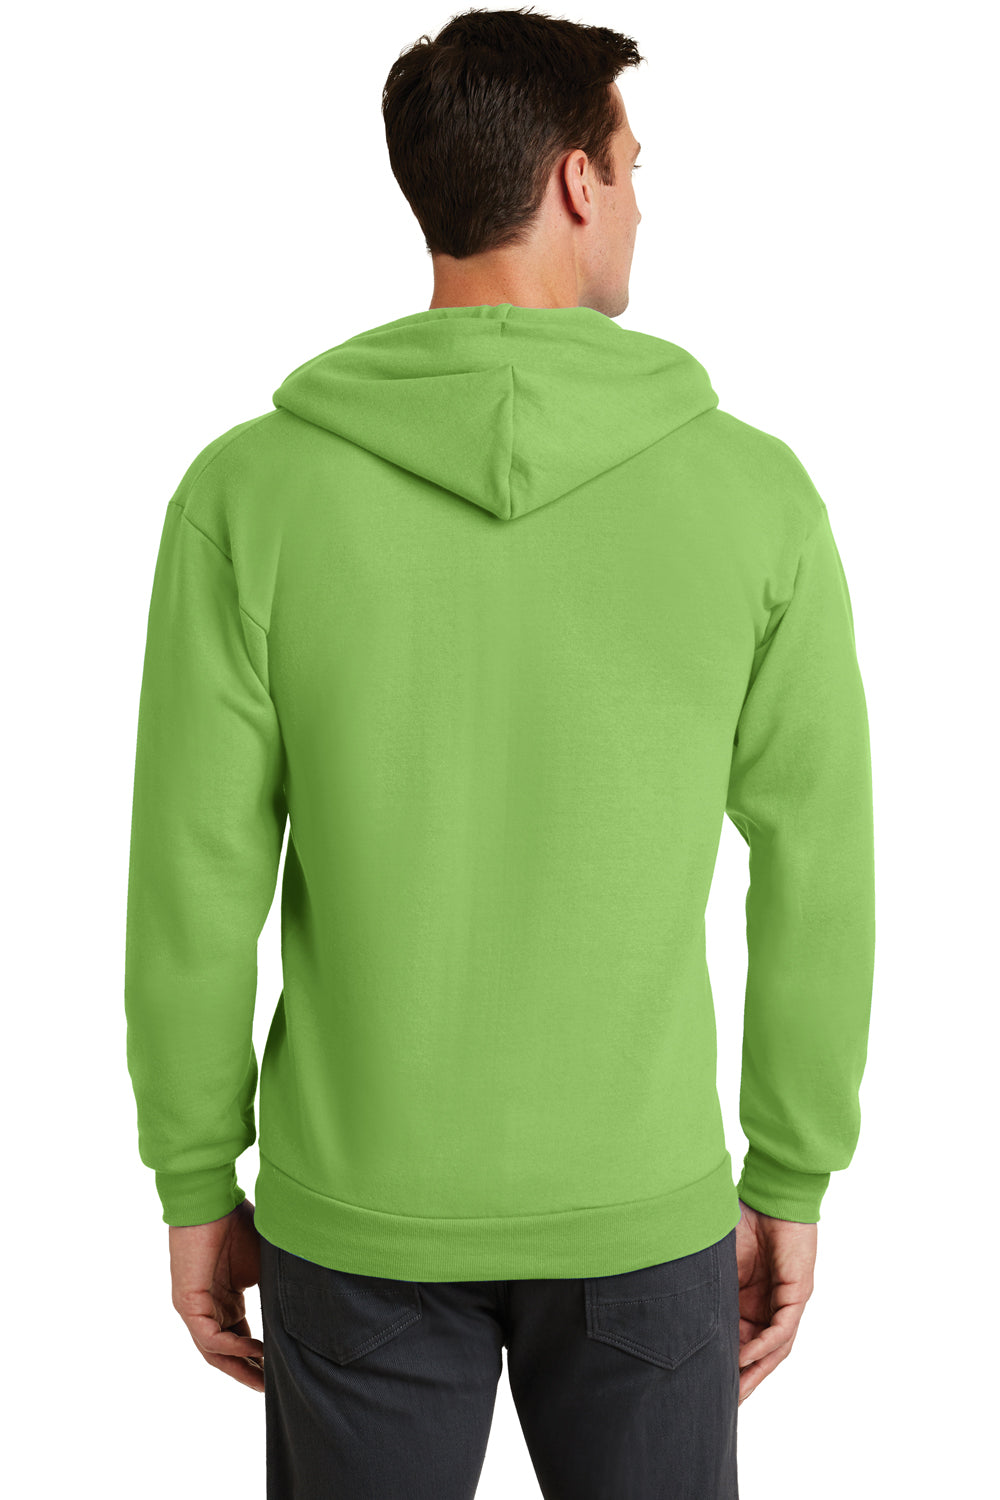 Port & Company PC78ZH Mens Core Fleece Full Zip Hooded Sweatshirt Hoodie Lime Green Back